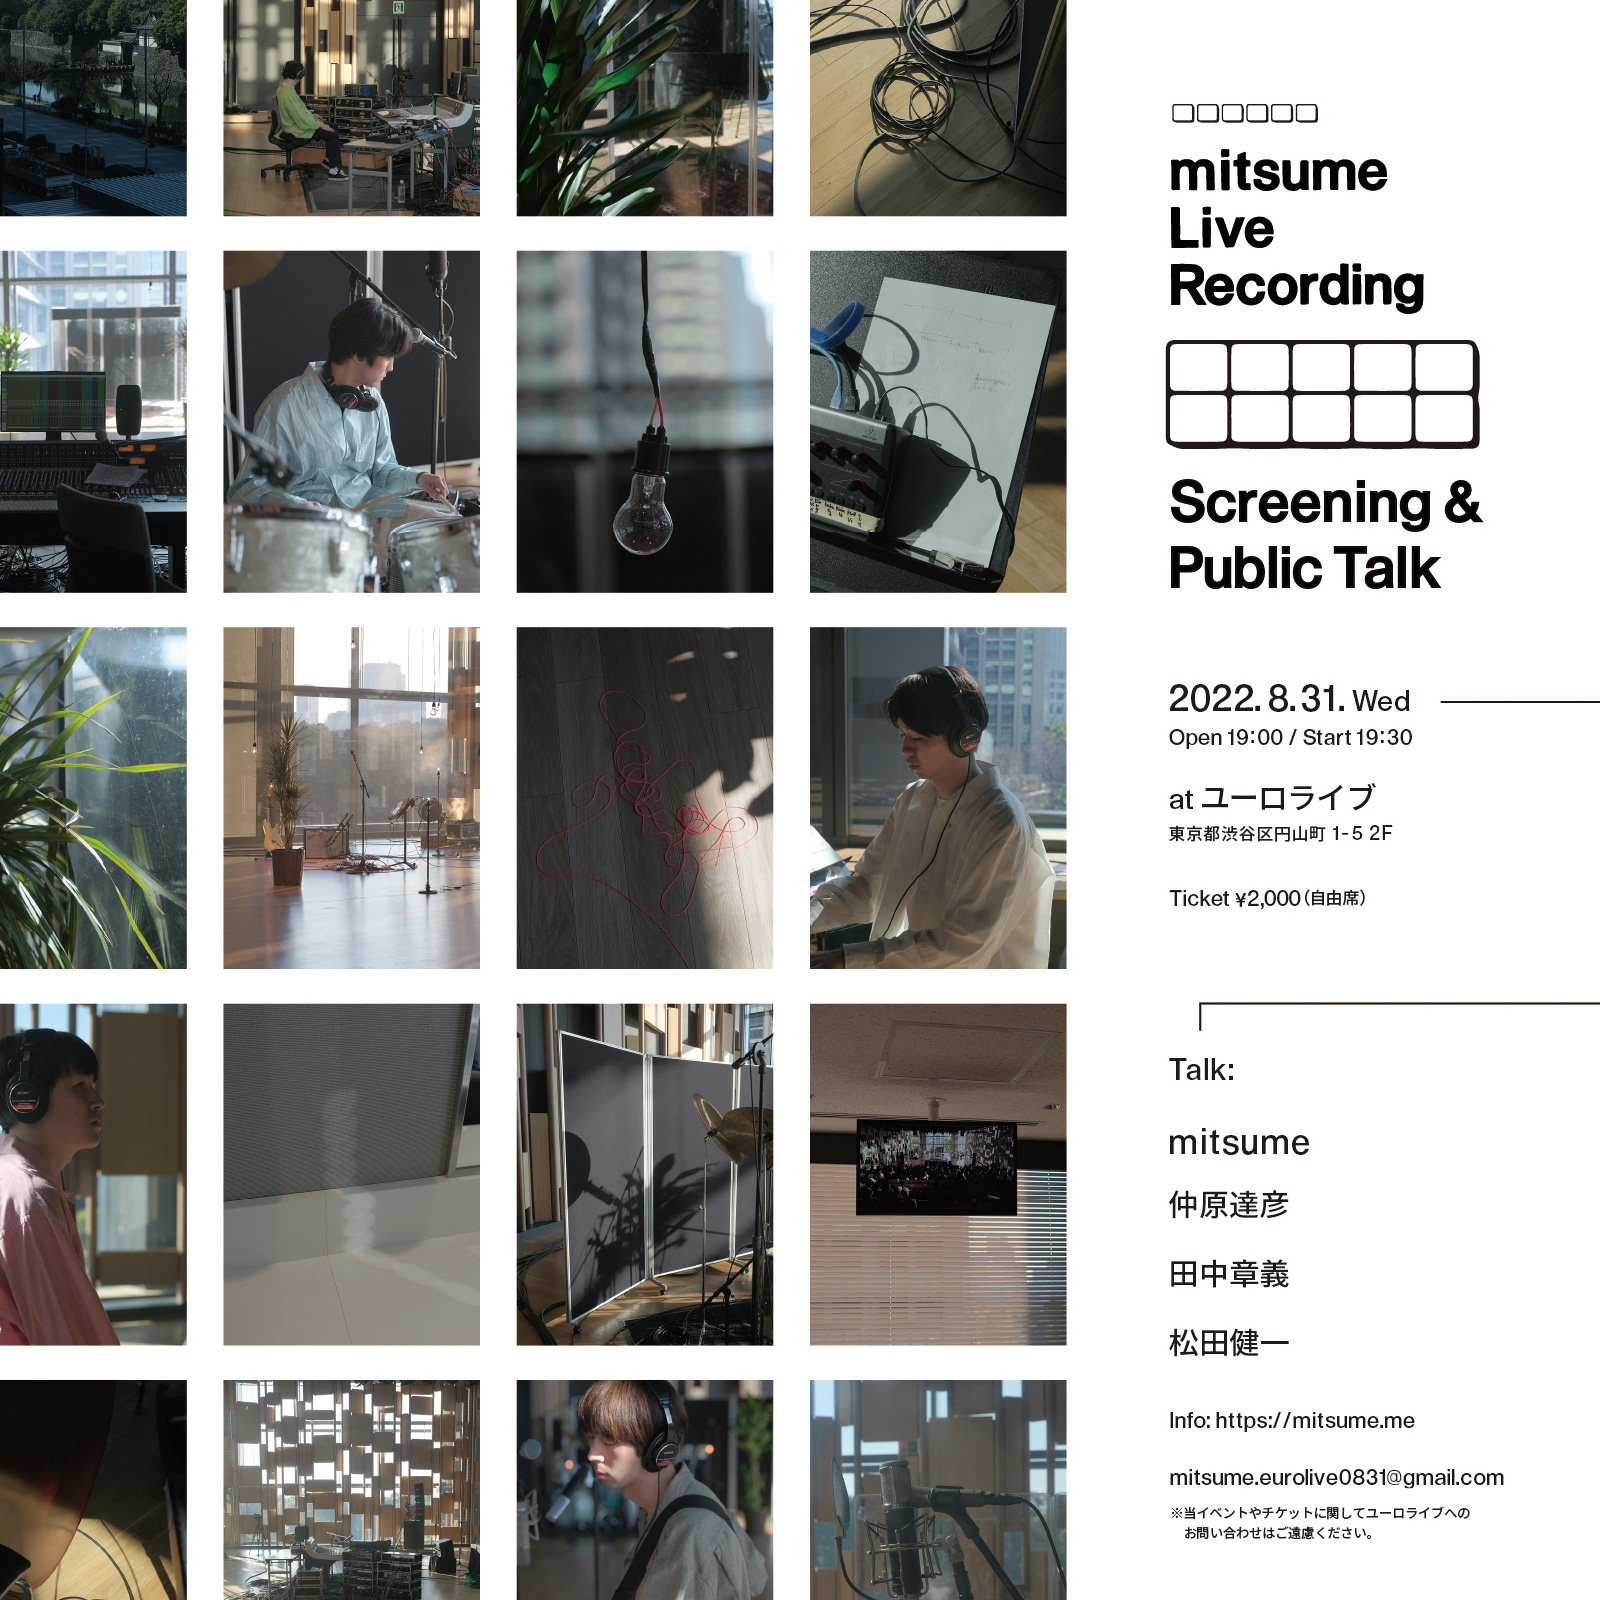 mitsume live “Recording” Screening & Public Talk